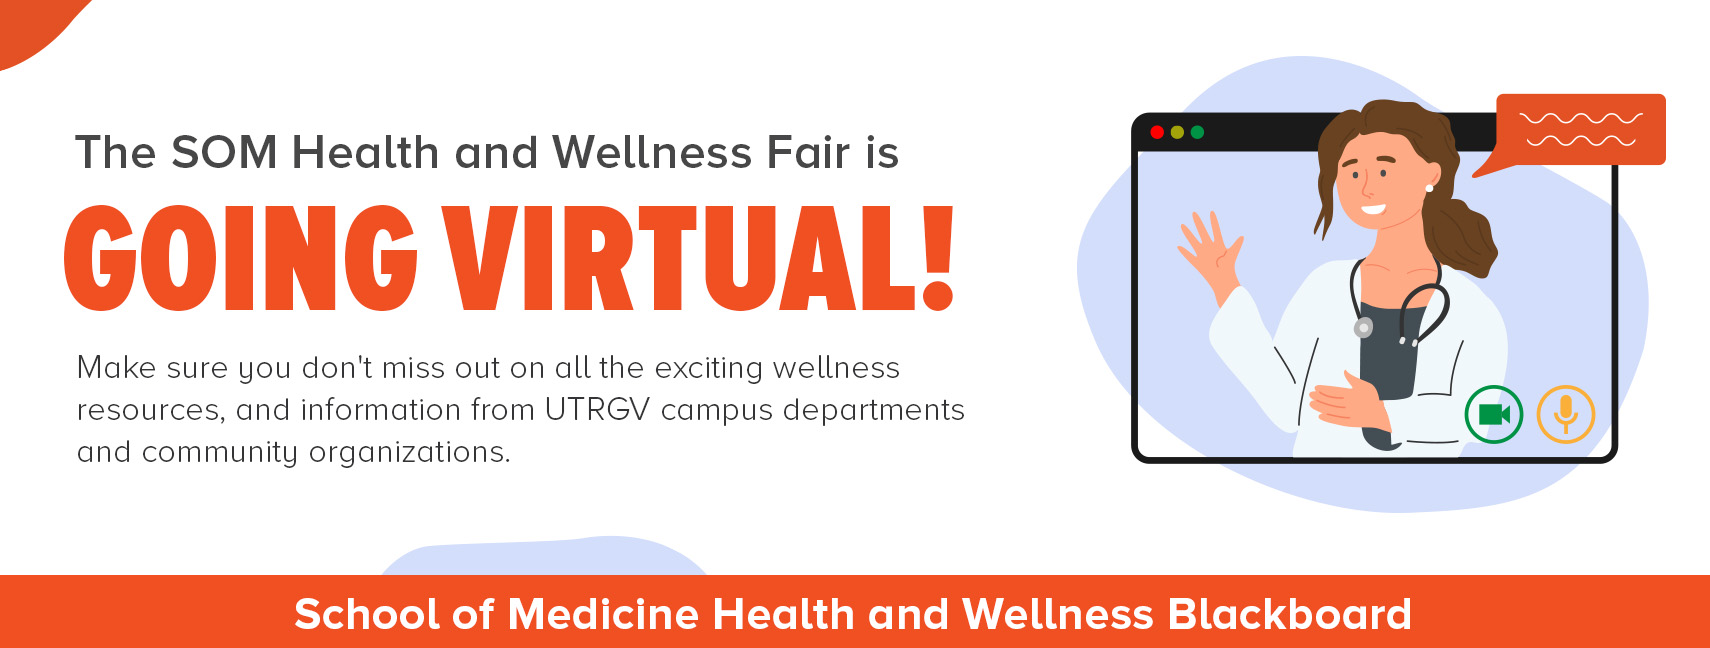 virtual student wellness fair